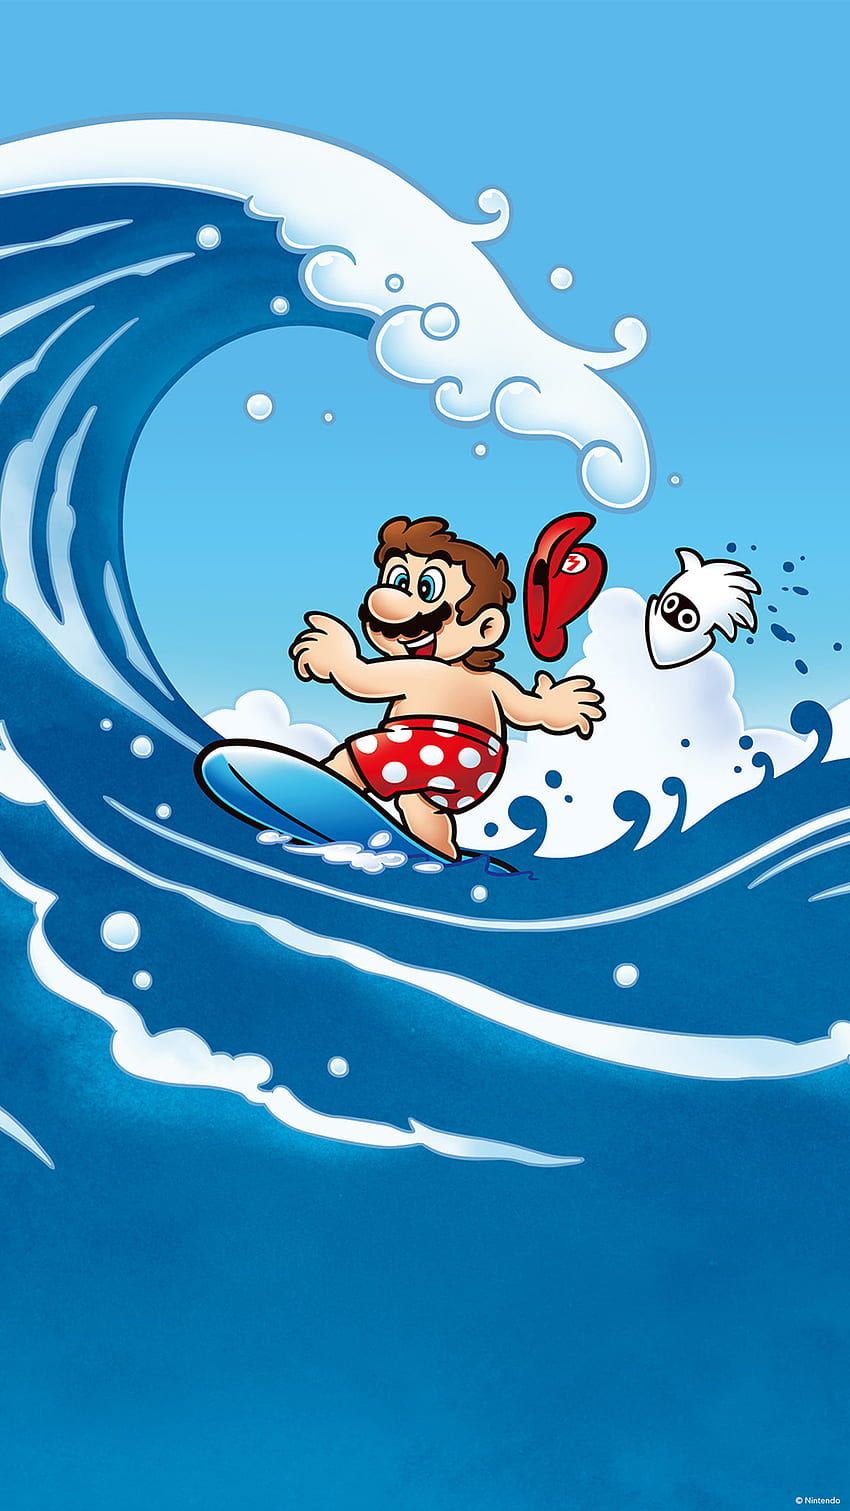 Mario surfing on a blue wave - Super Mario, surf